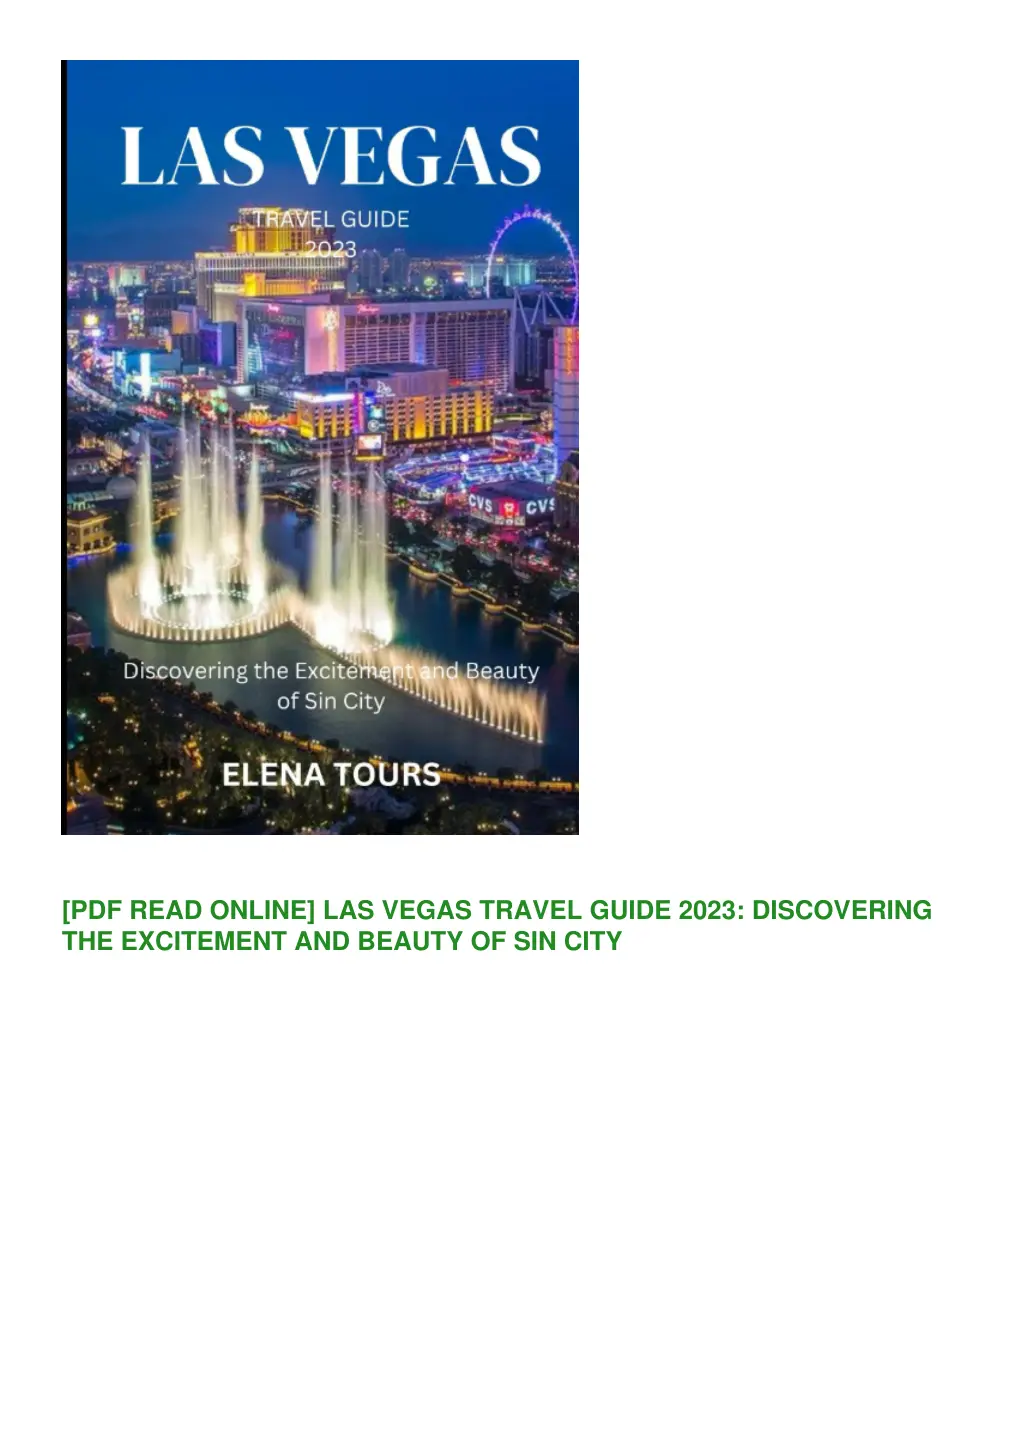 pdf read online las vegas travel guide 2023 1